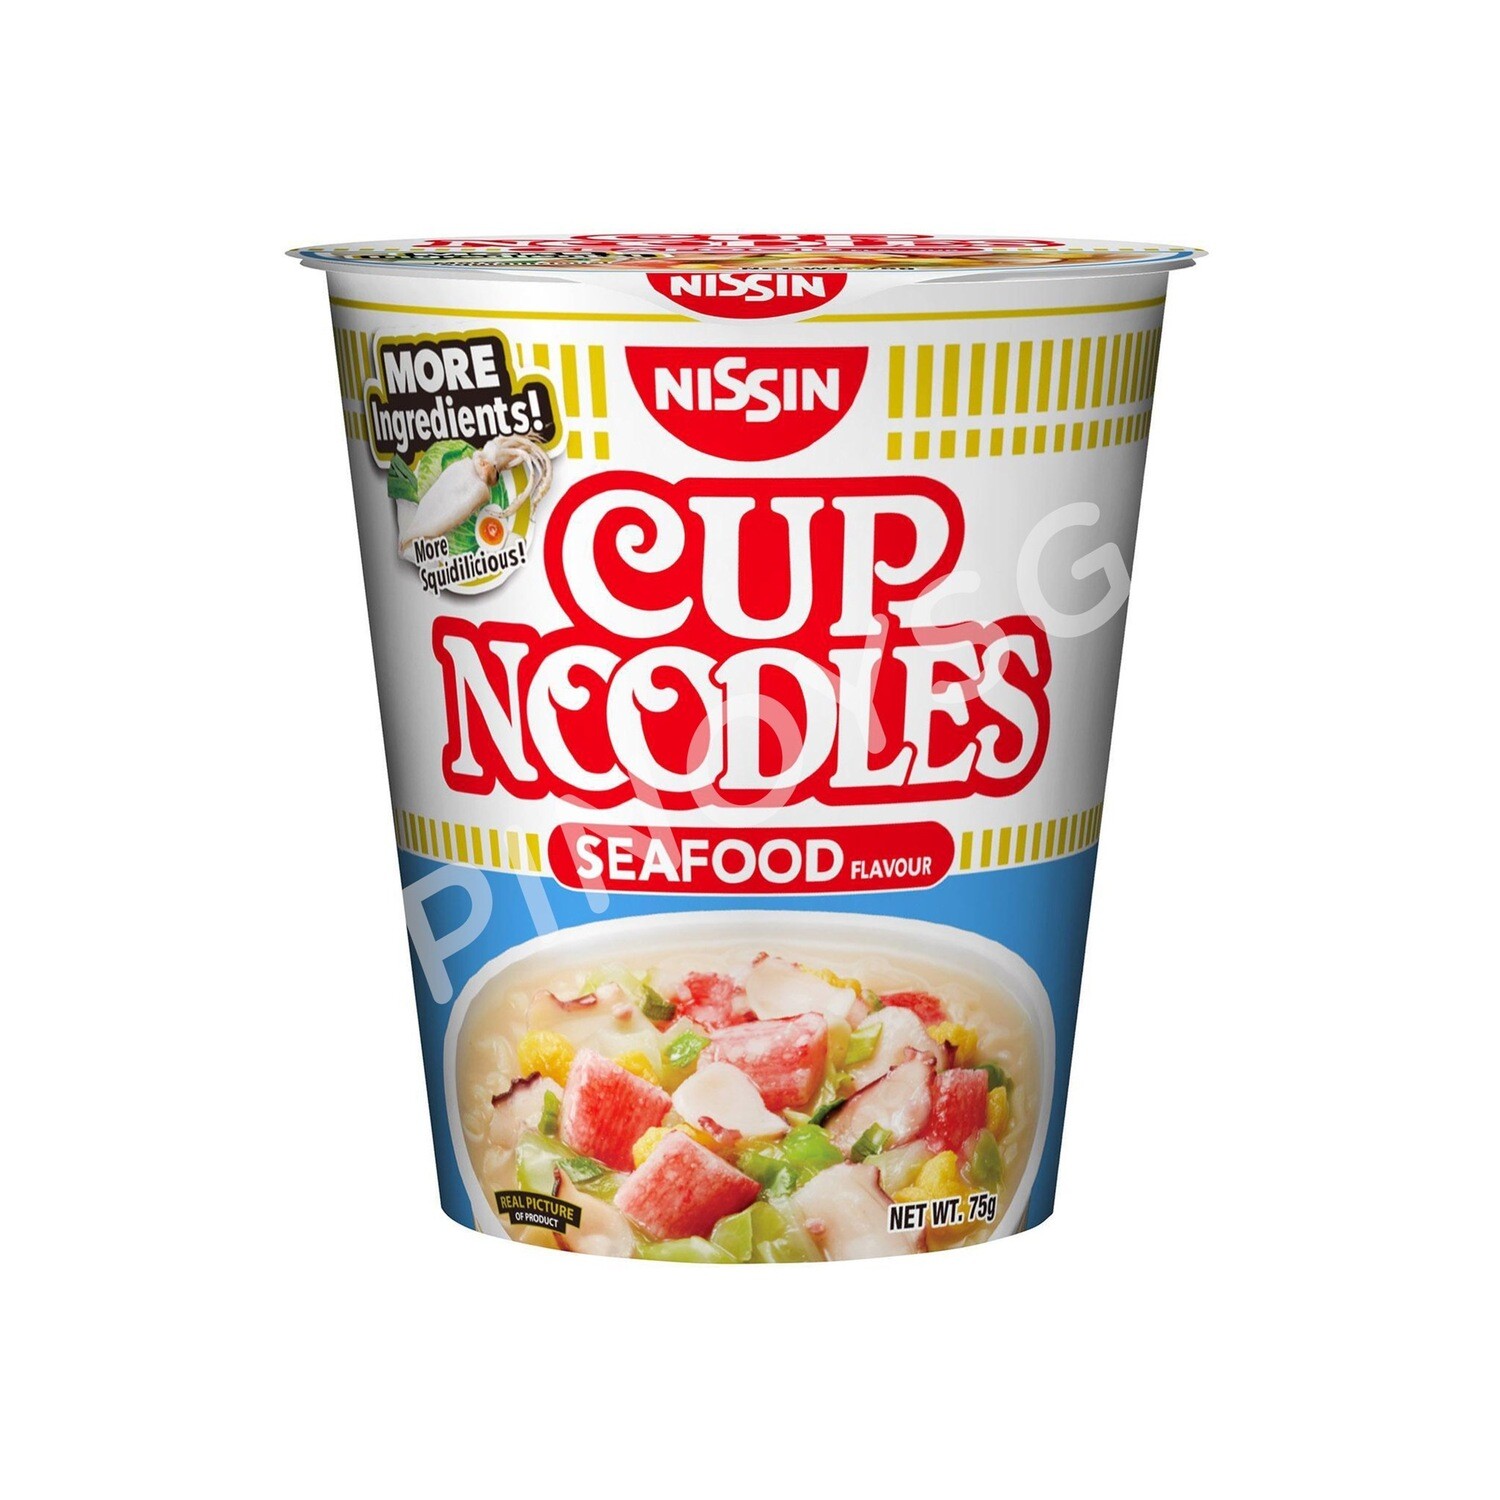 Nissin Cup Noodles Seafood Flavour, 72g